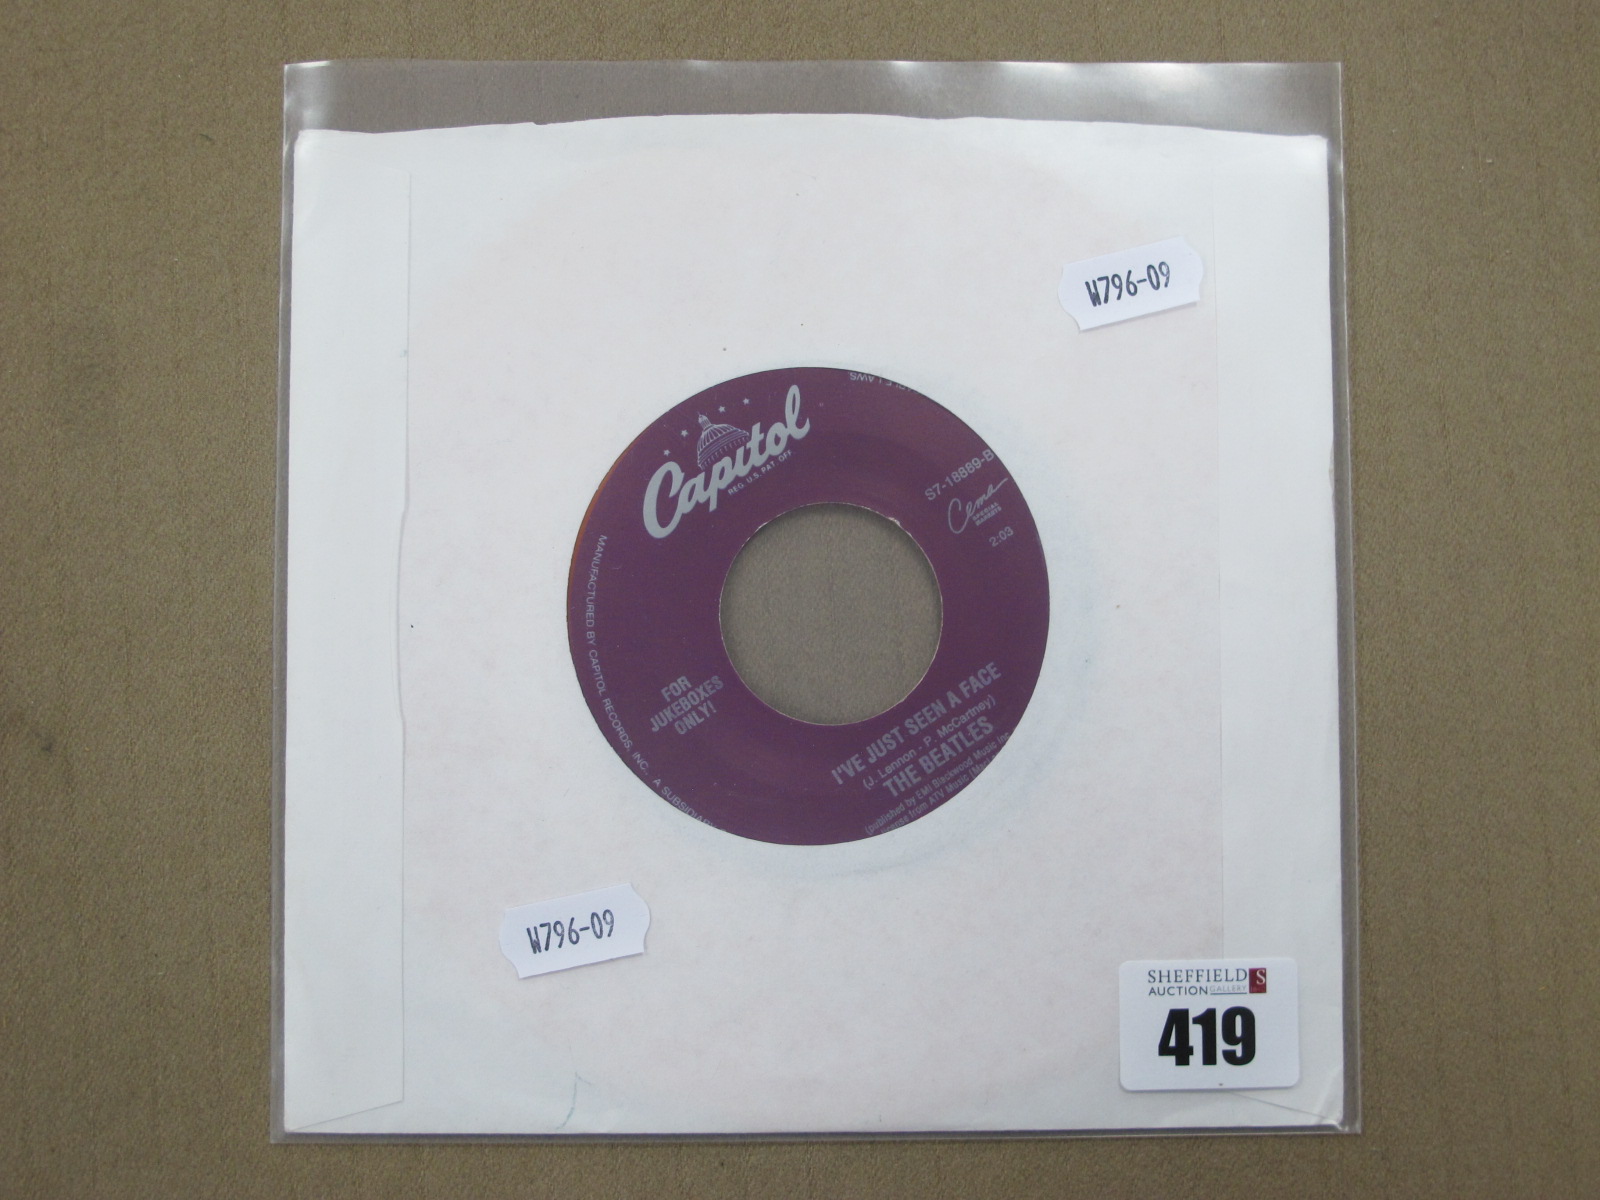 Beatles - You've Got To Hide Your Love Away (Capitol S7 18889) 1996 jukebox only orange vinyl.